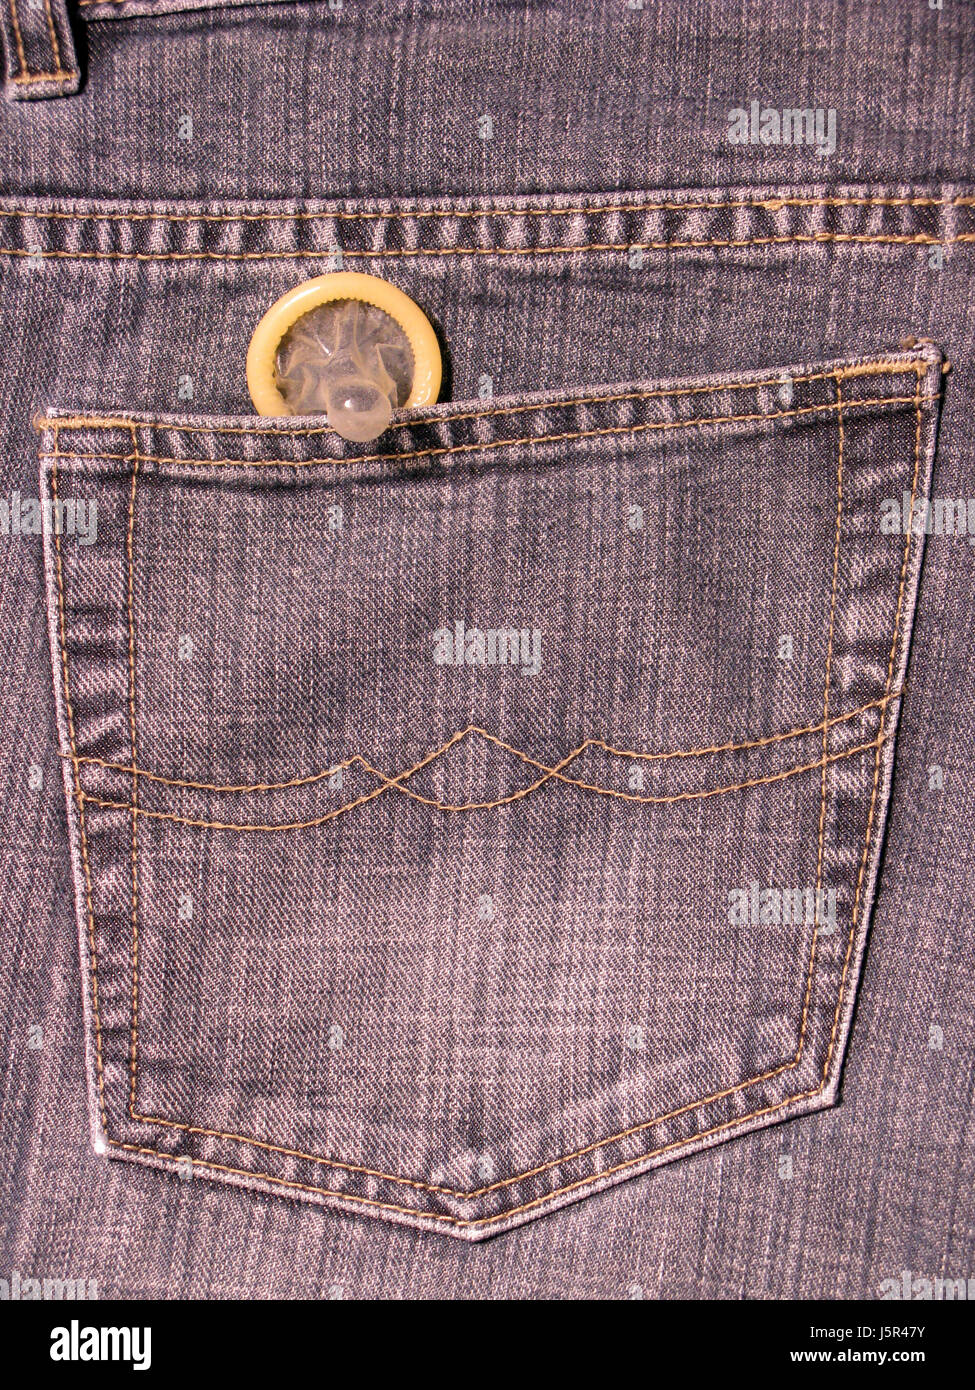 condom in jeans pocket Stock Photo - Alamy